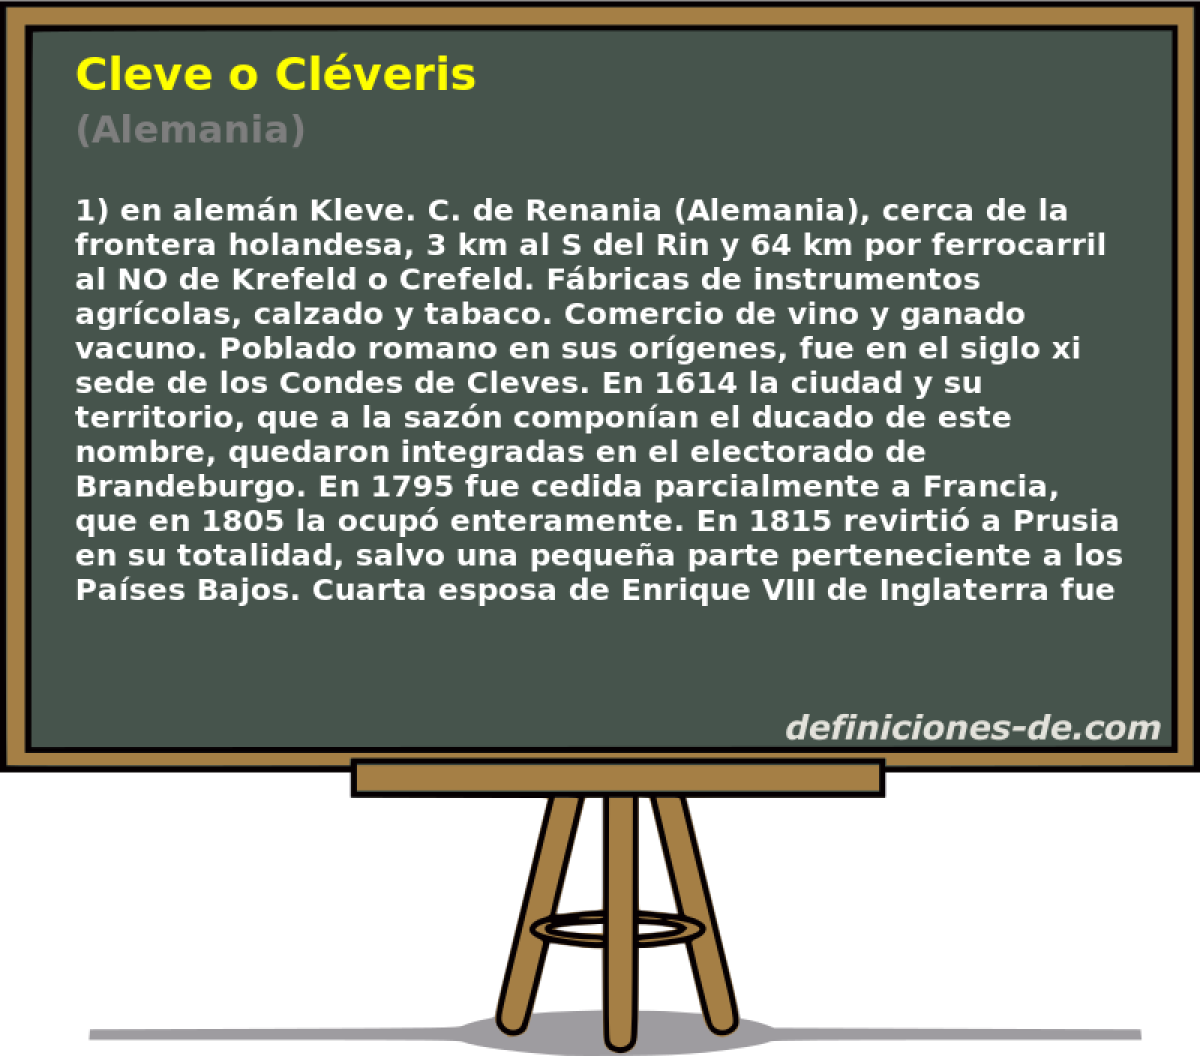 Cleve o Clveris (Alemania)